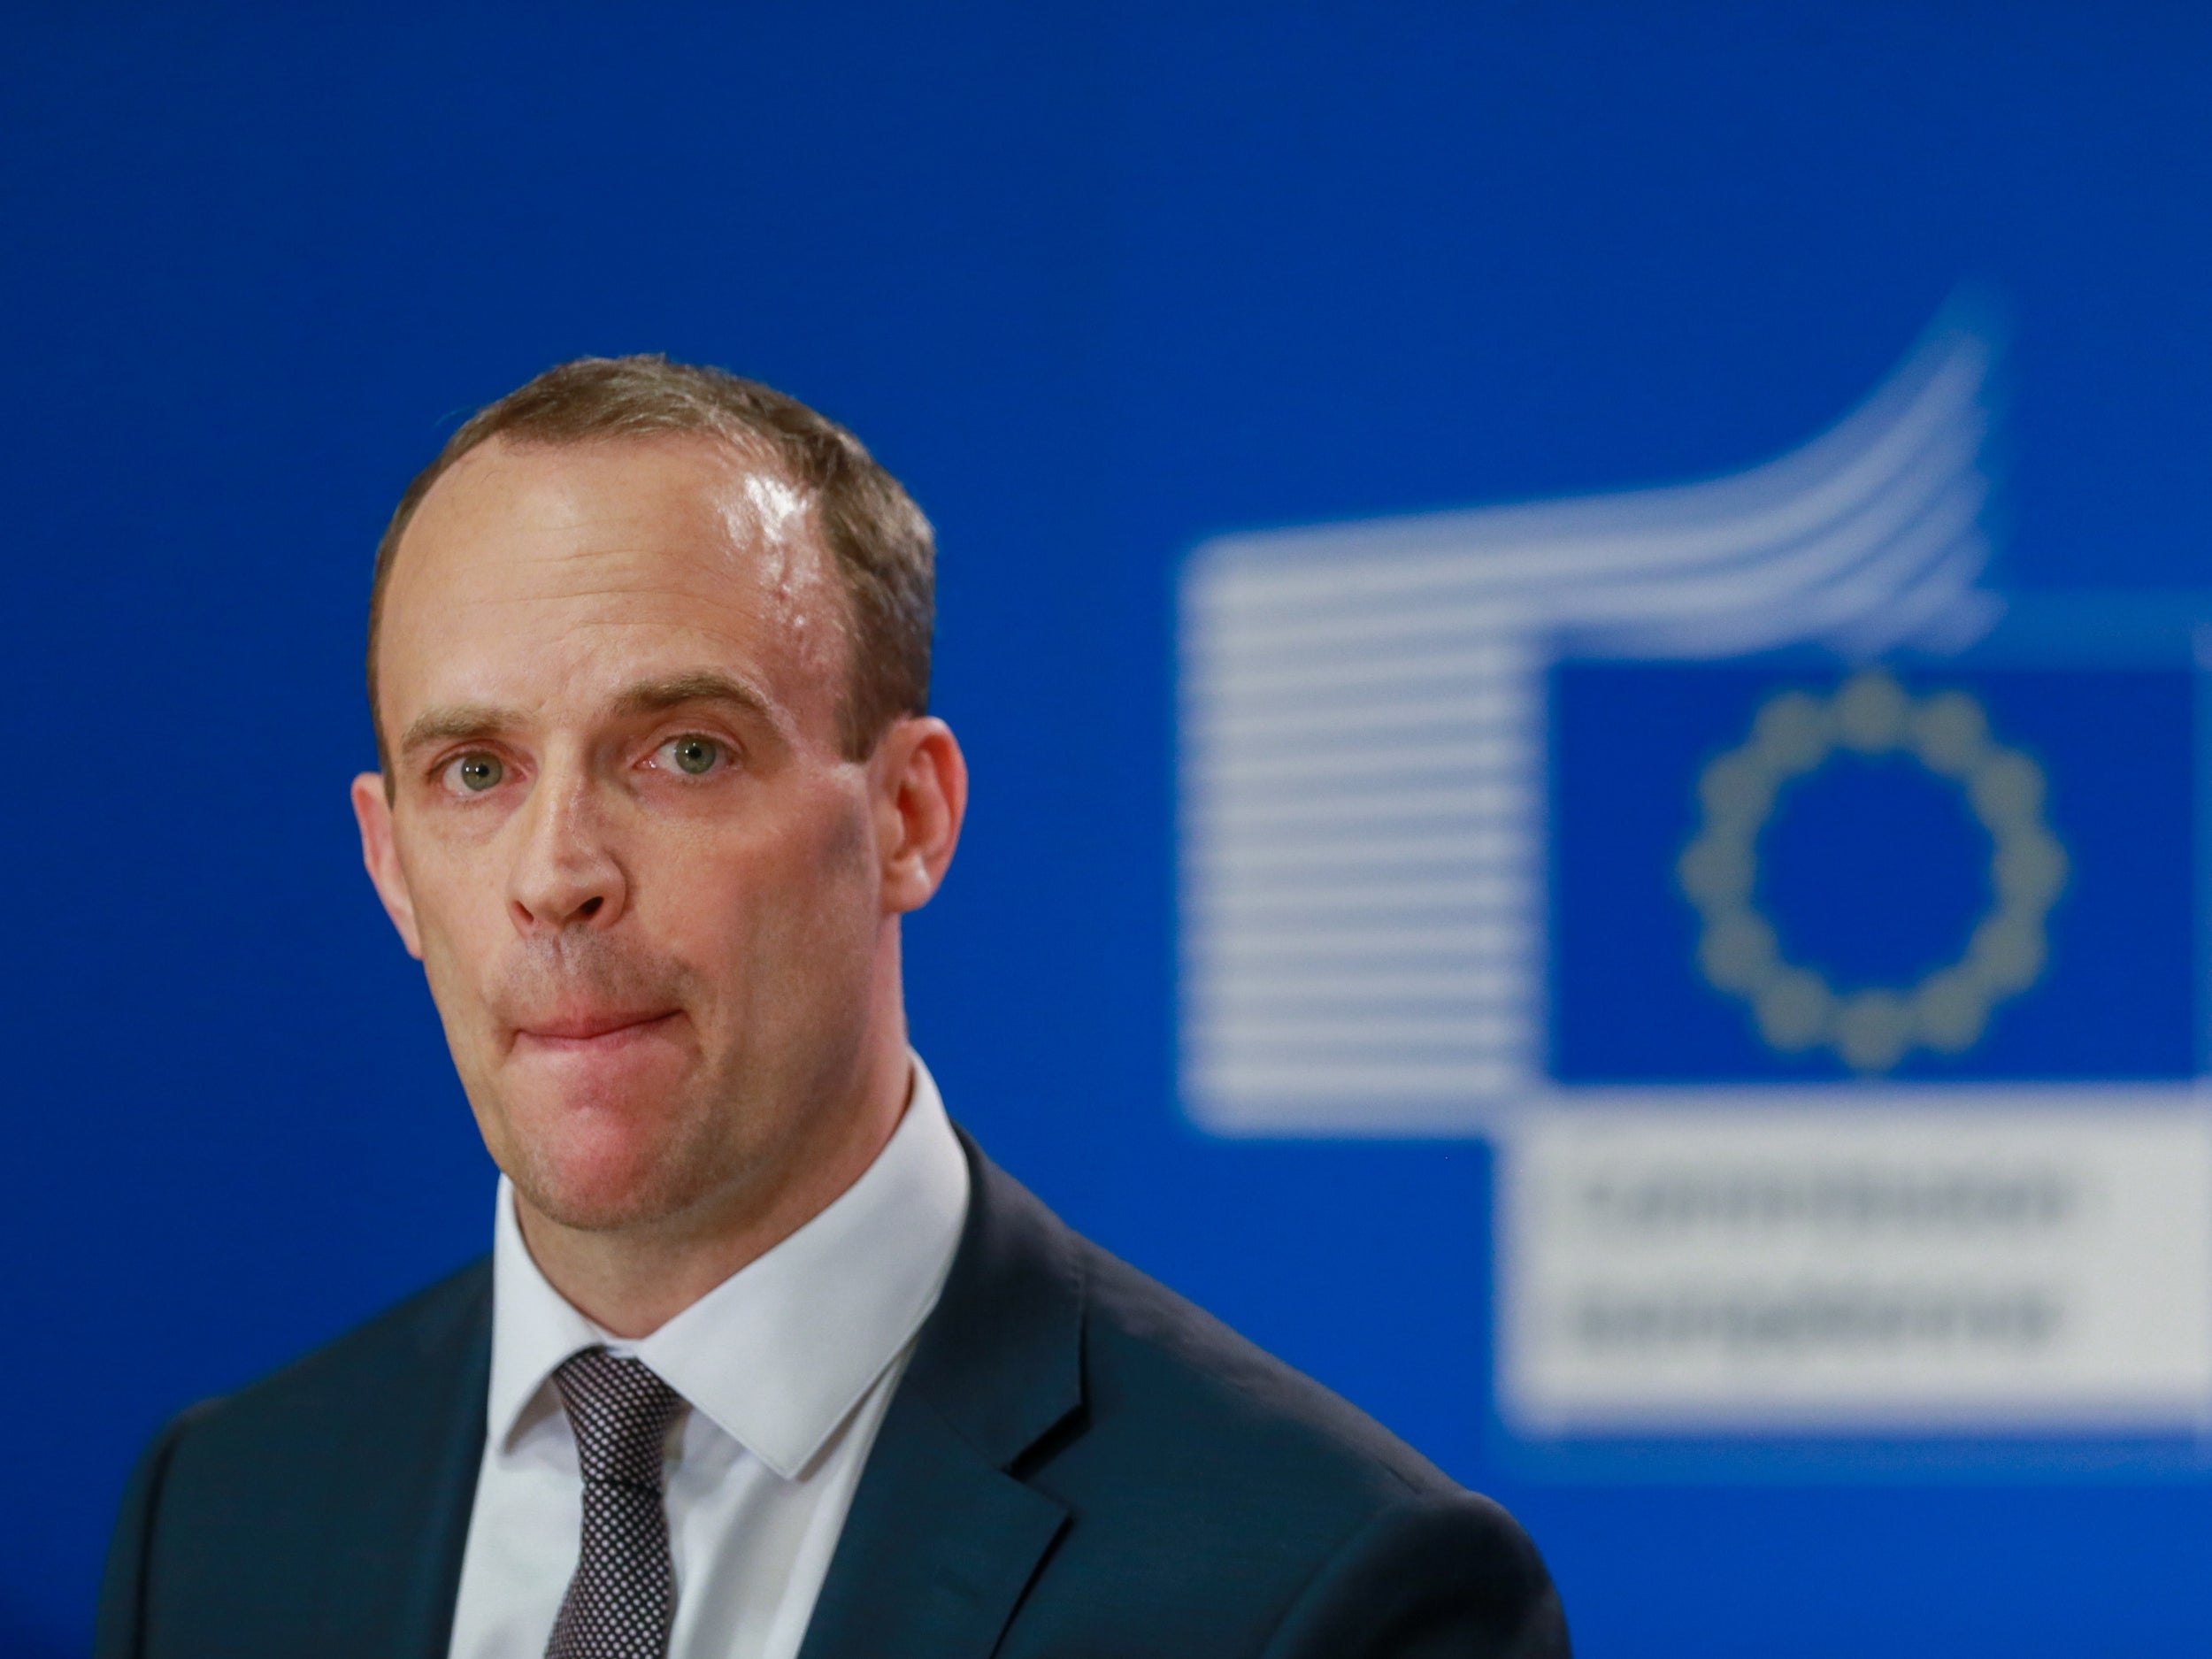 Dominic Raab warned the EU over the territory